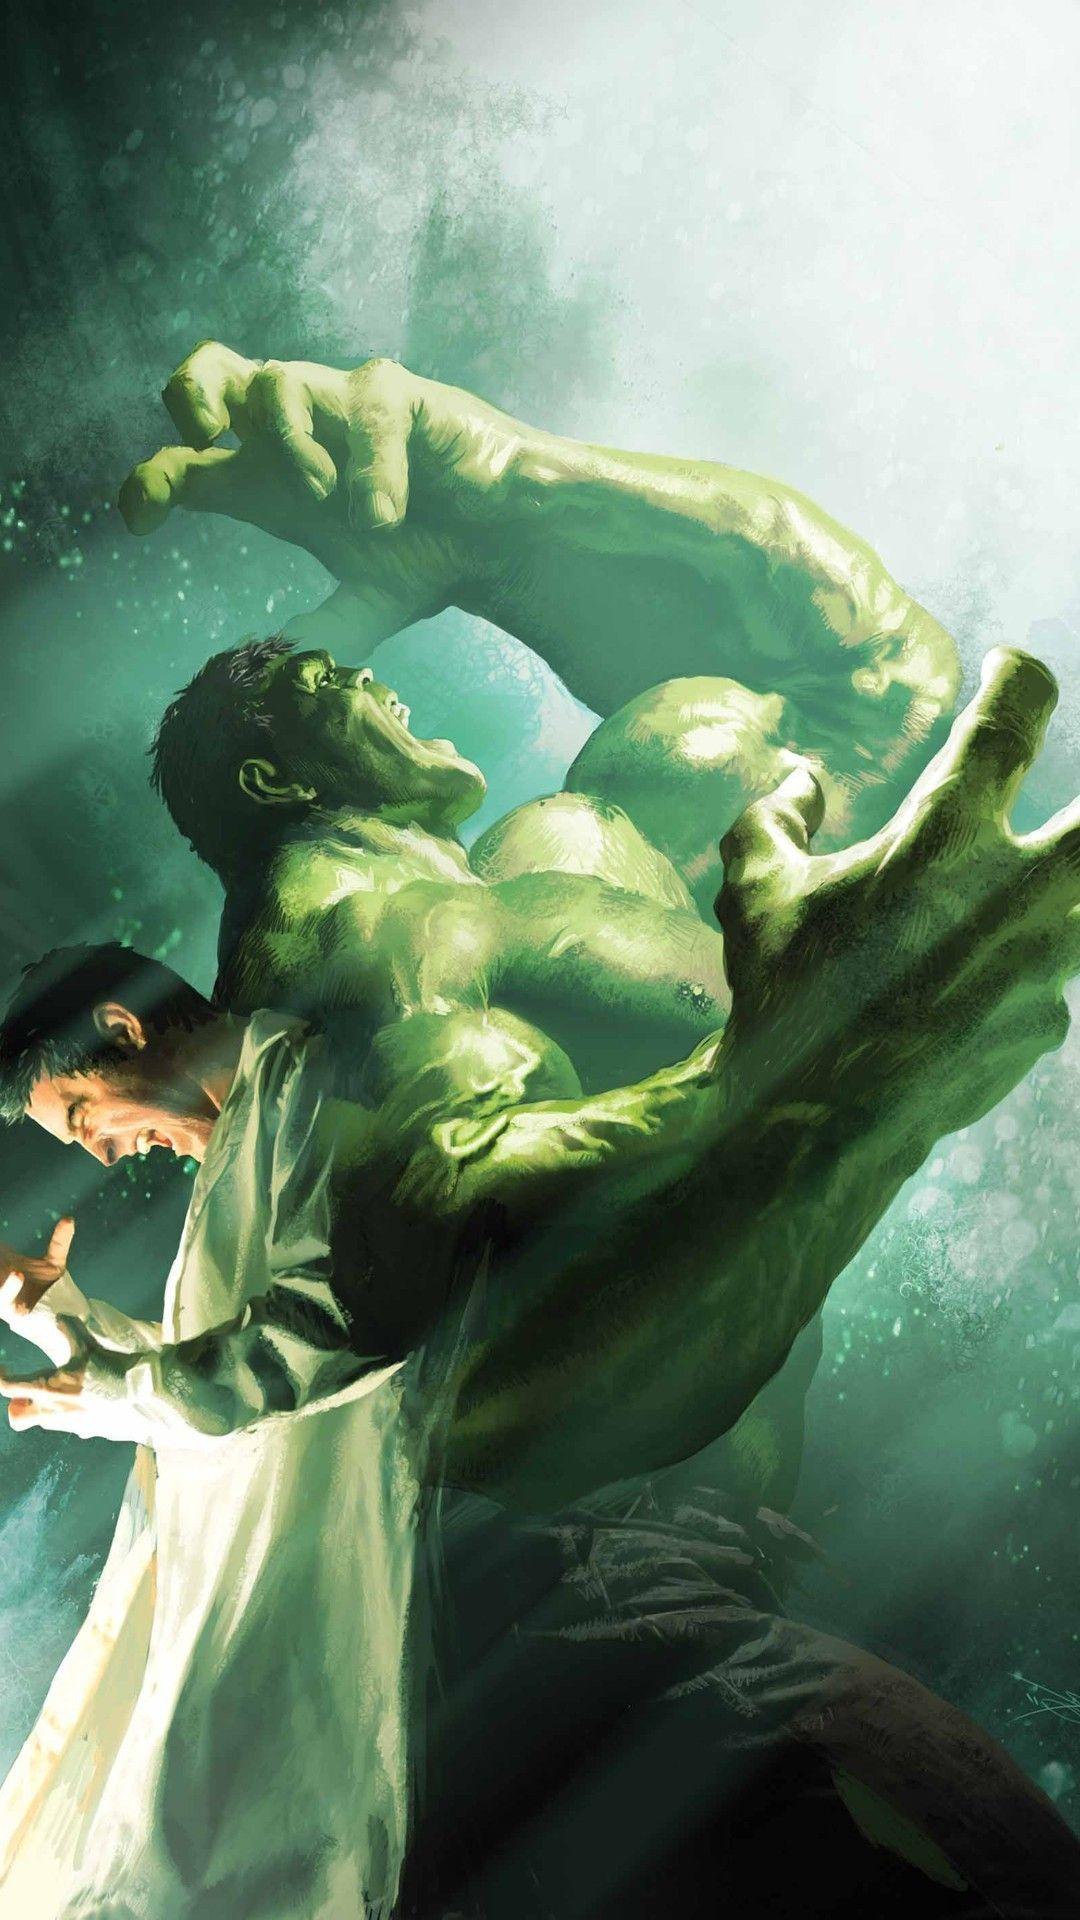 Bruce Banner turning into the Hulk Mobile Wallpaper 5433